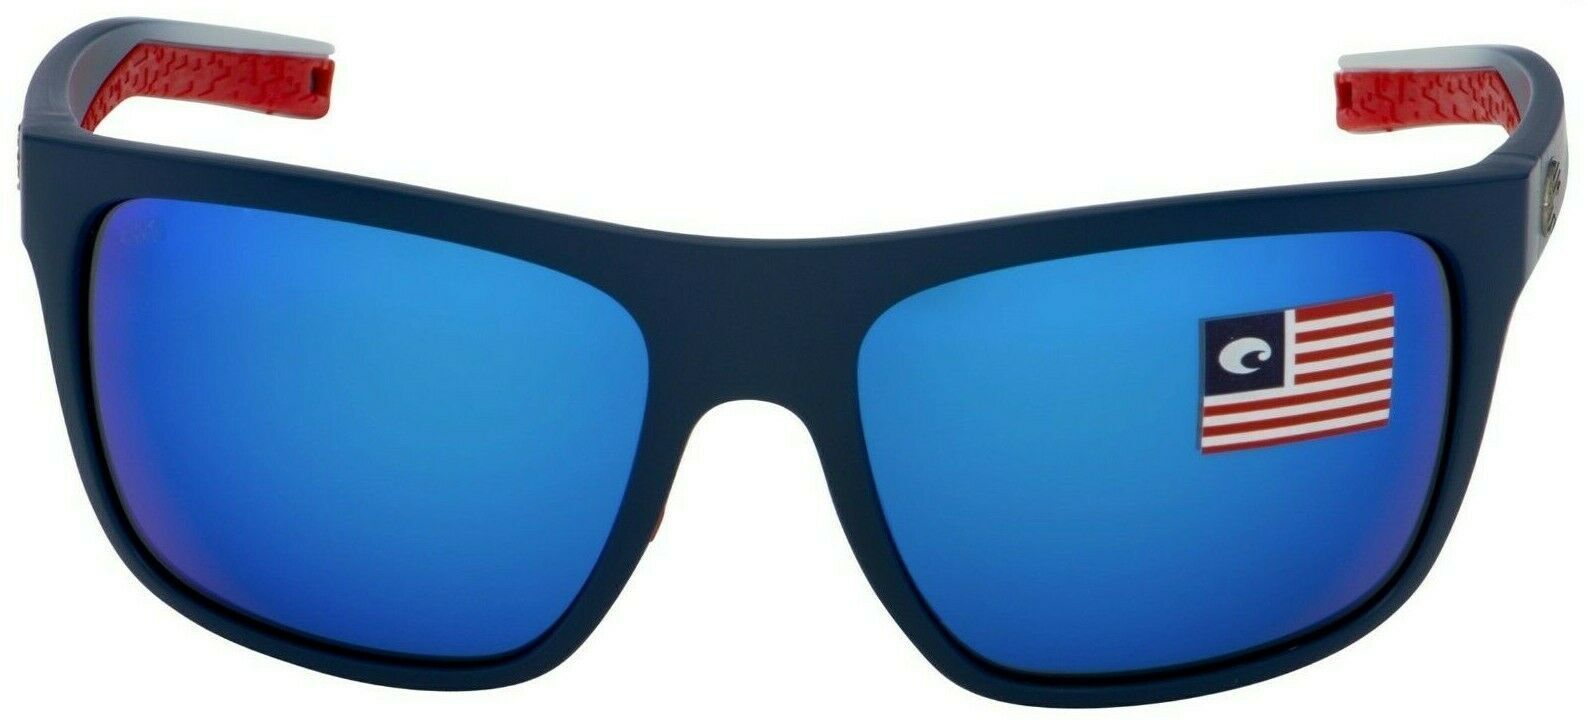 Costa Del Mar Sunglasses Broadbill 61-17-118 Matte Freedom Fade/Blue Mirror 580G-097963855785-classypw.com-2